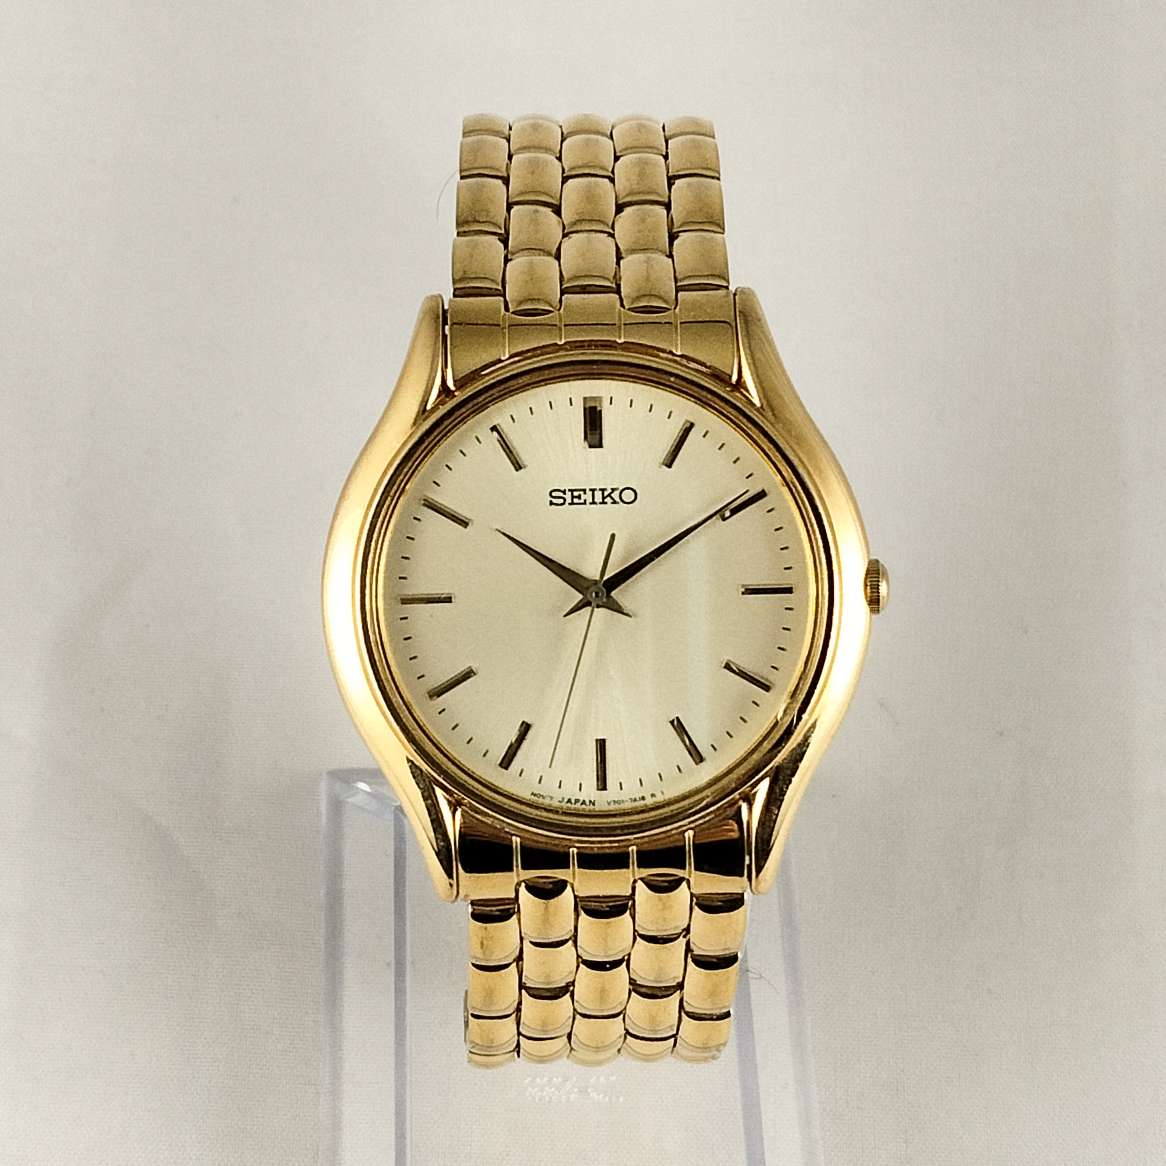 Seiko Oversized Watch, Gold Tone Details, Bracelet Strap